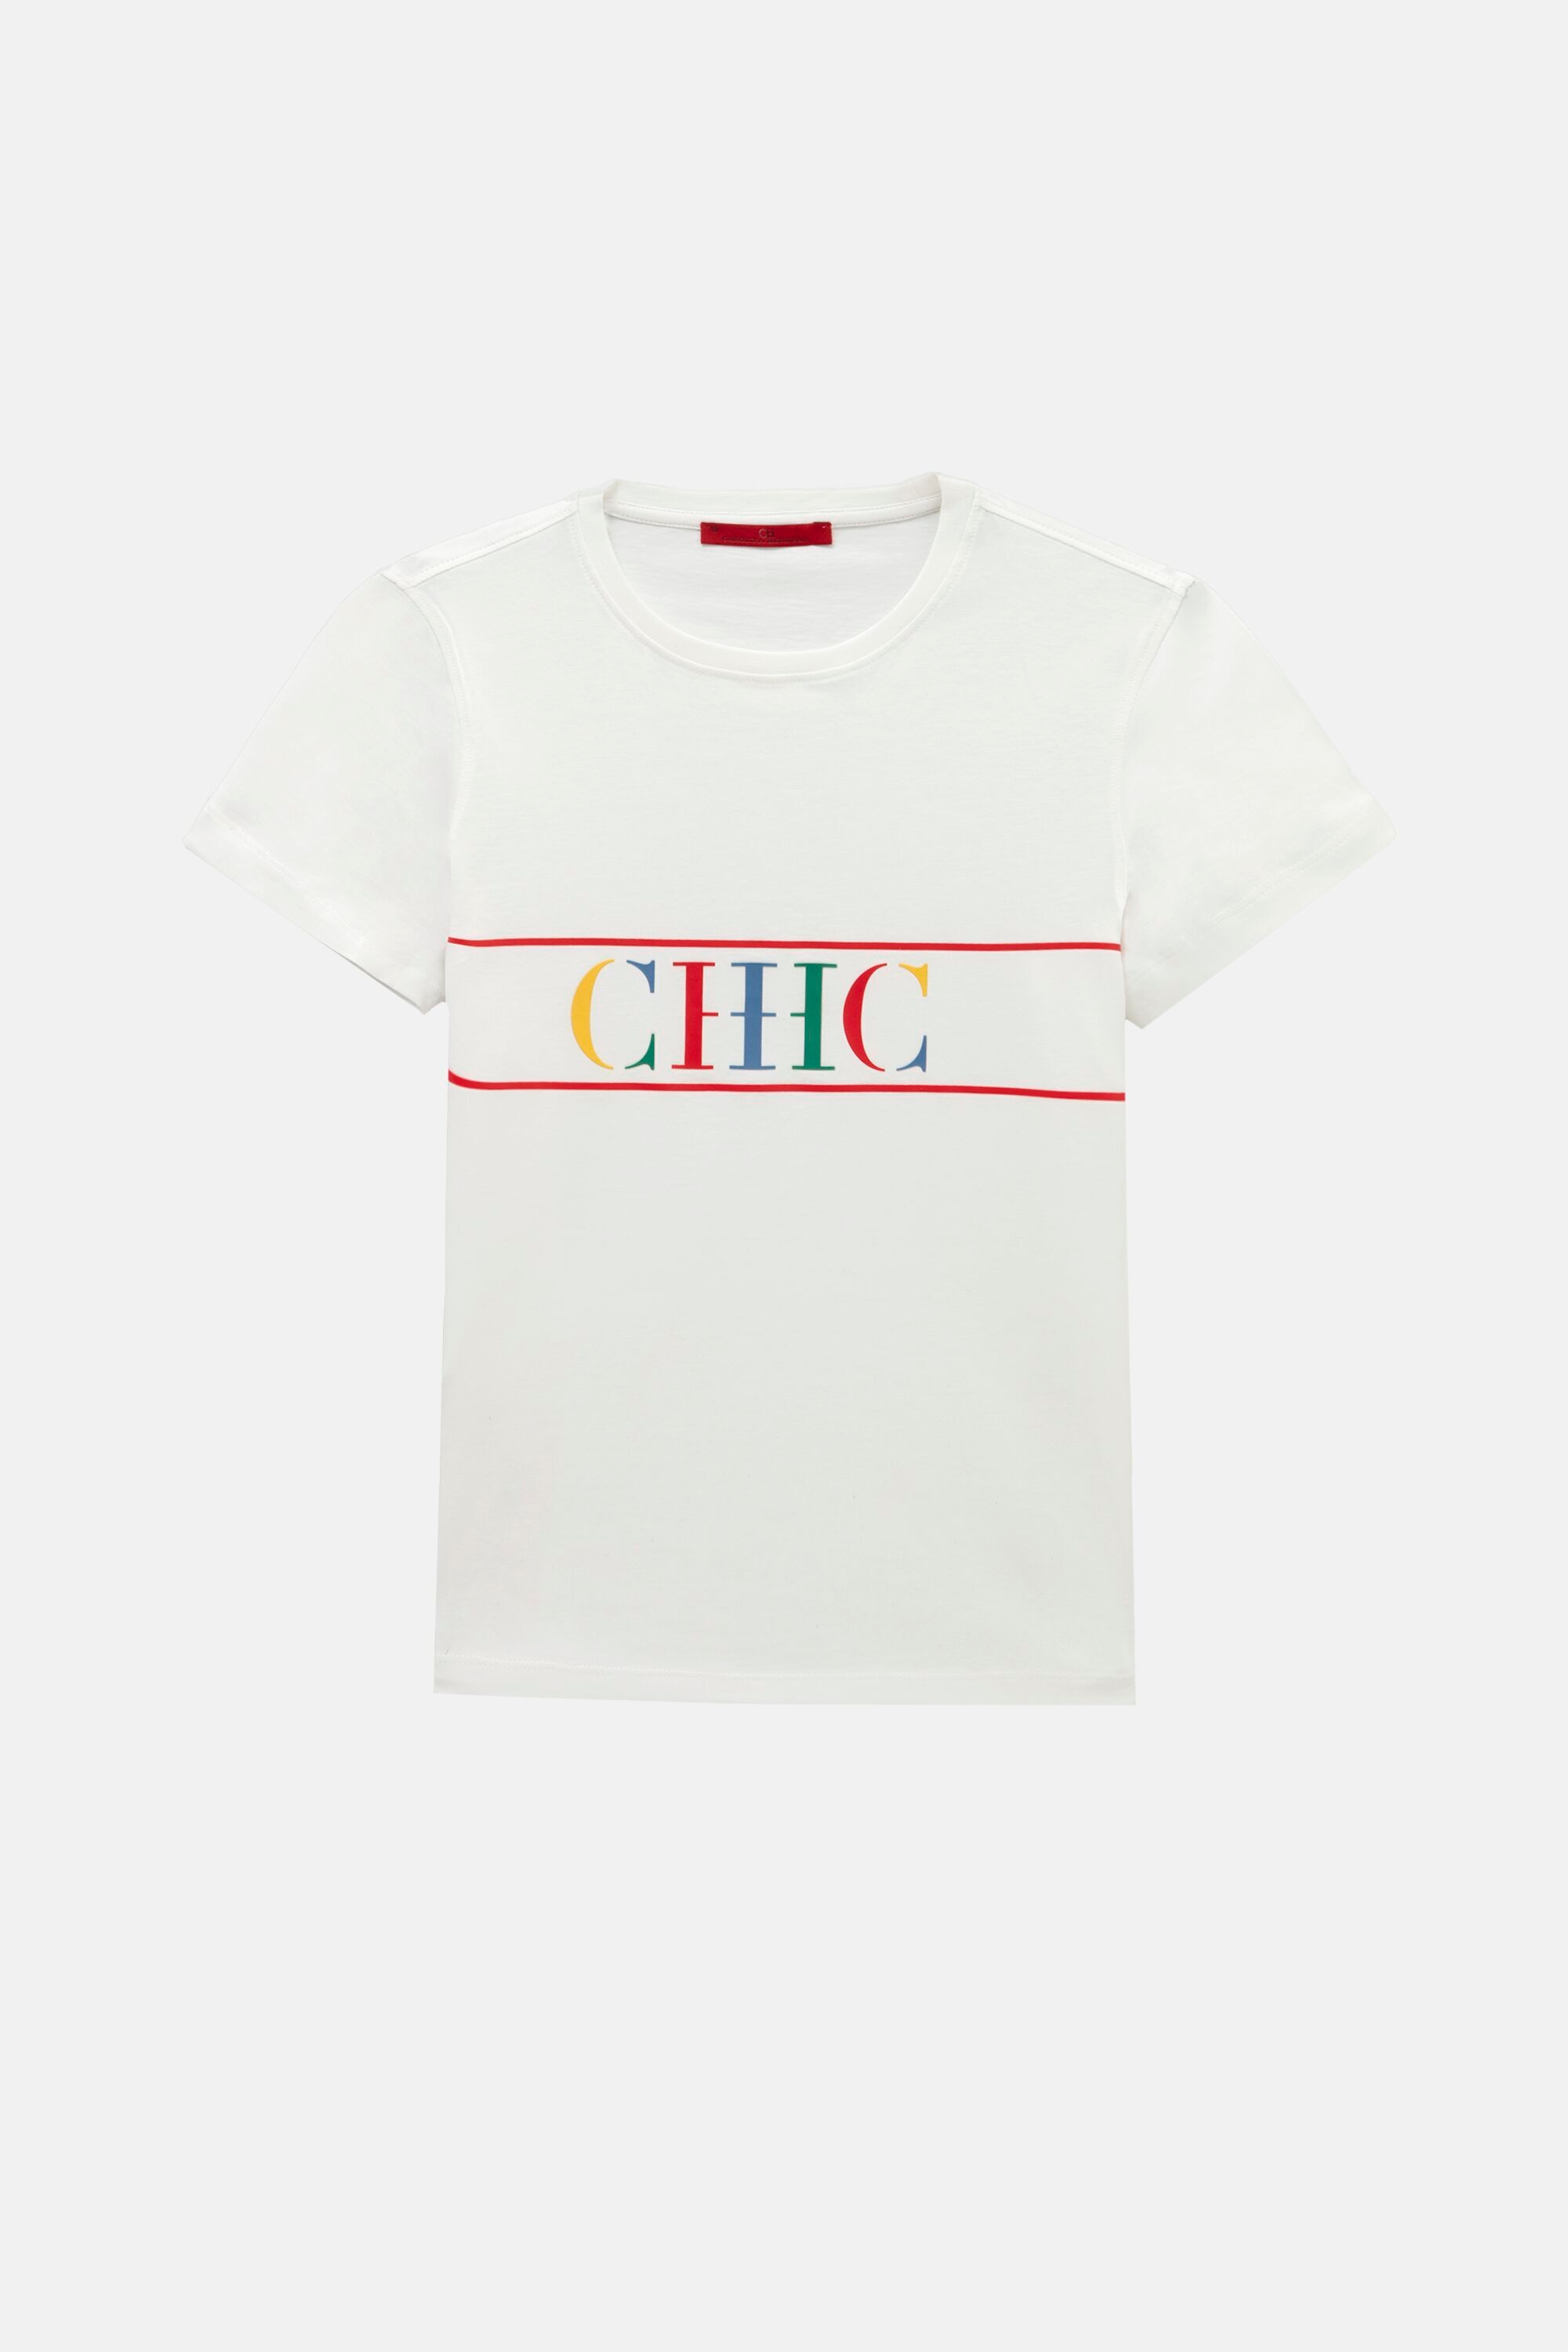 CH printed t-shirt